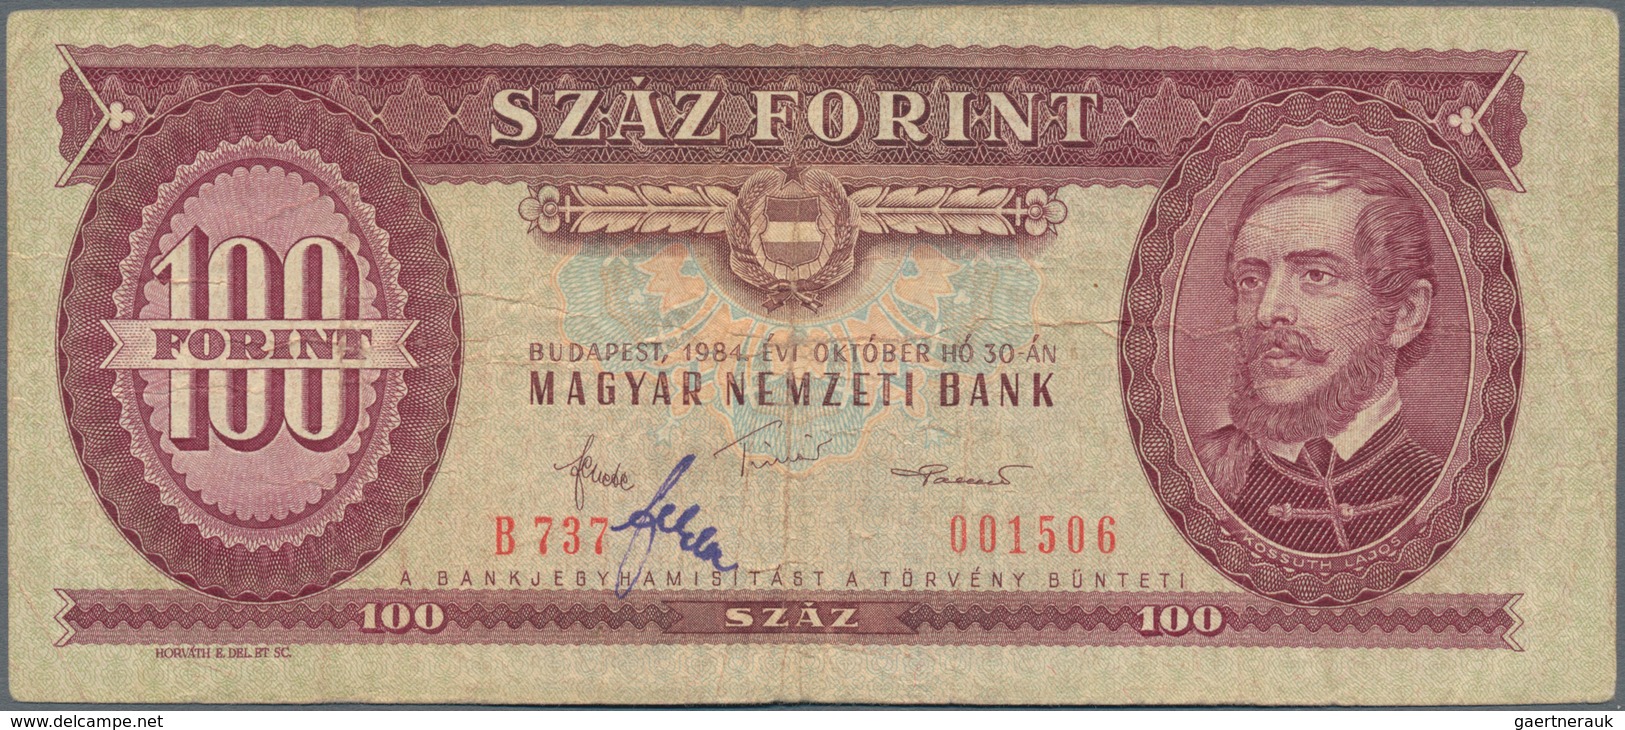 Hungary / Ungarn: Magyar Nemzeti Bank, nice lot with 4 banknotes, 2x 50 Forint 1986 and 2x 100 Forin